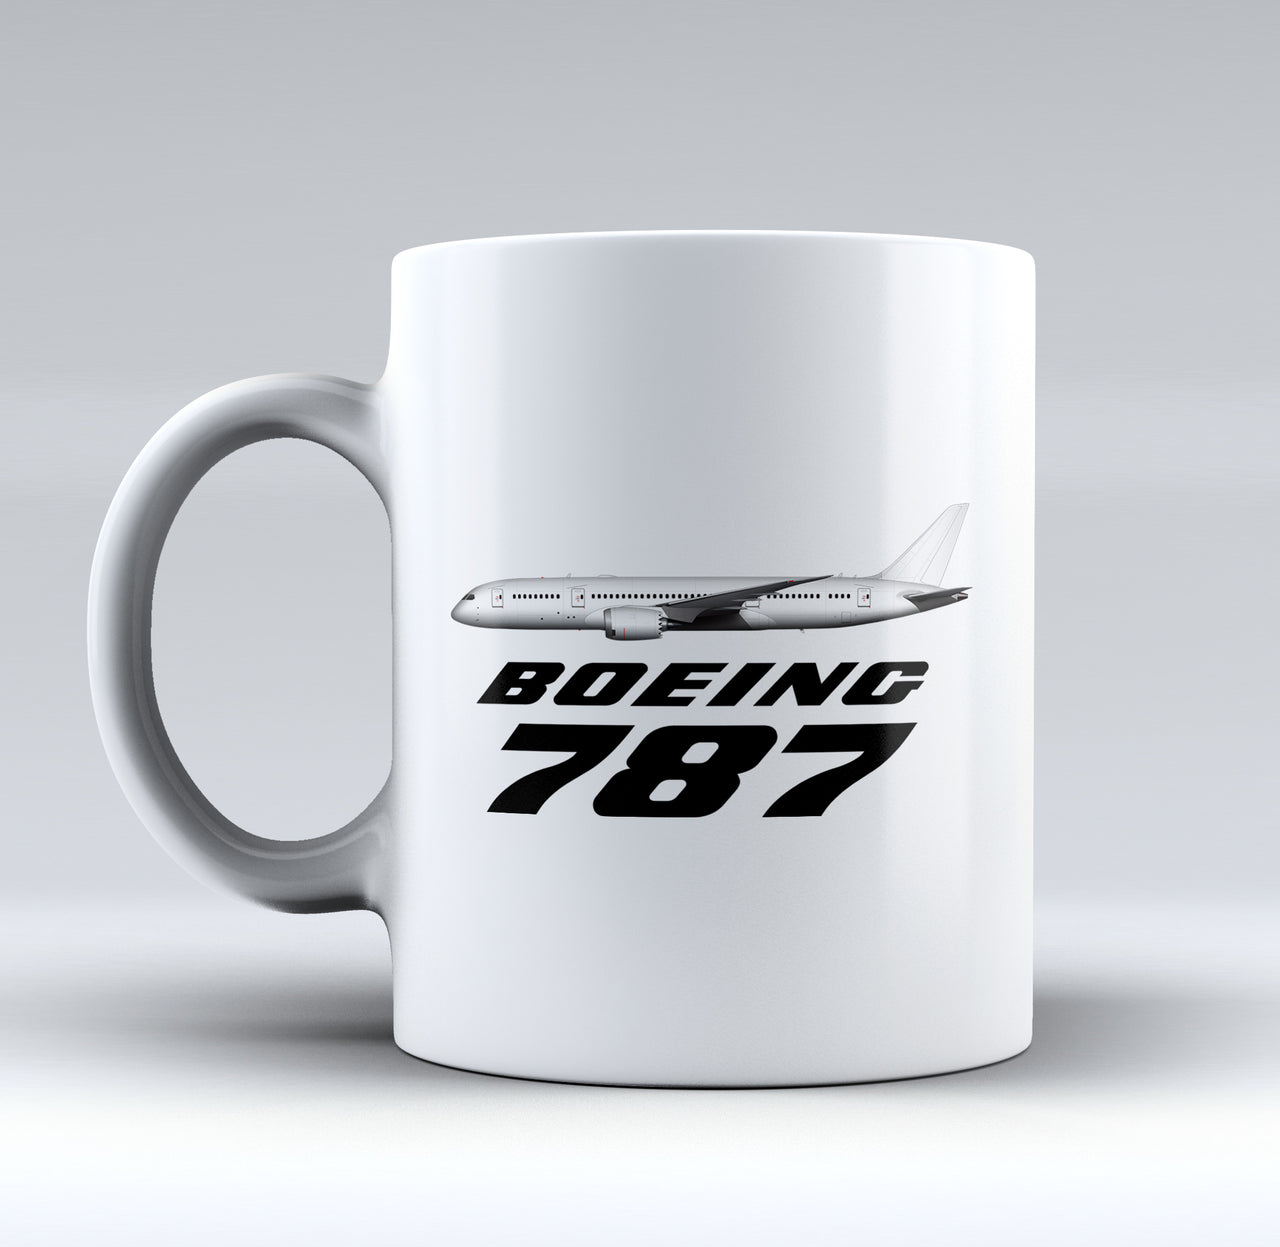 The Boeing 787 Designed Mugs